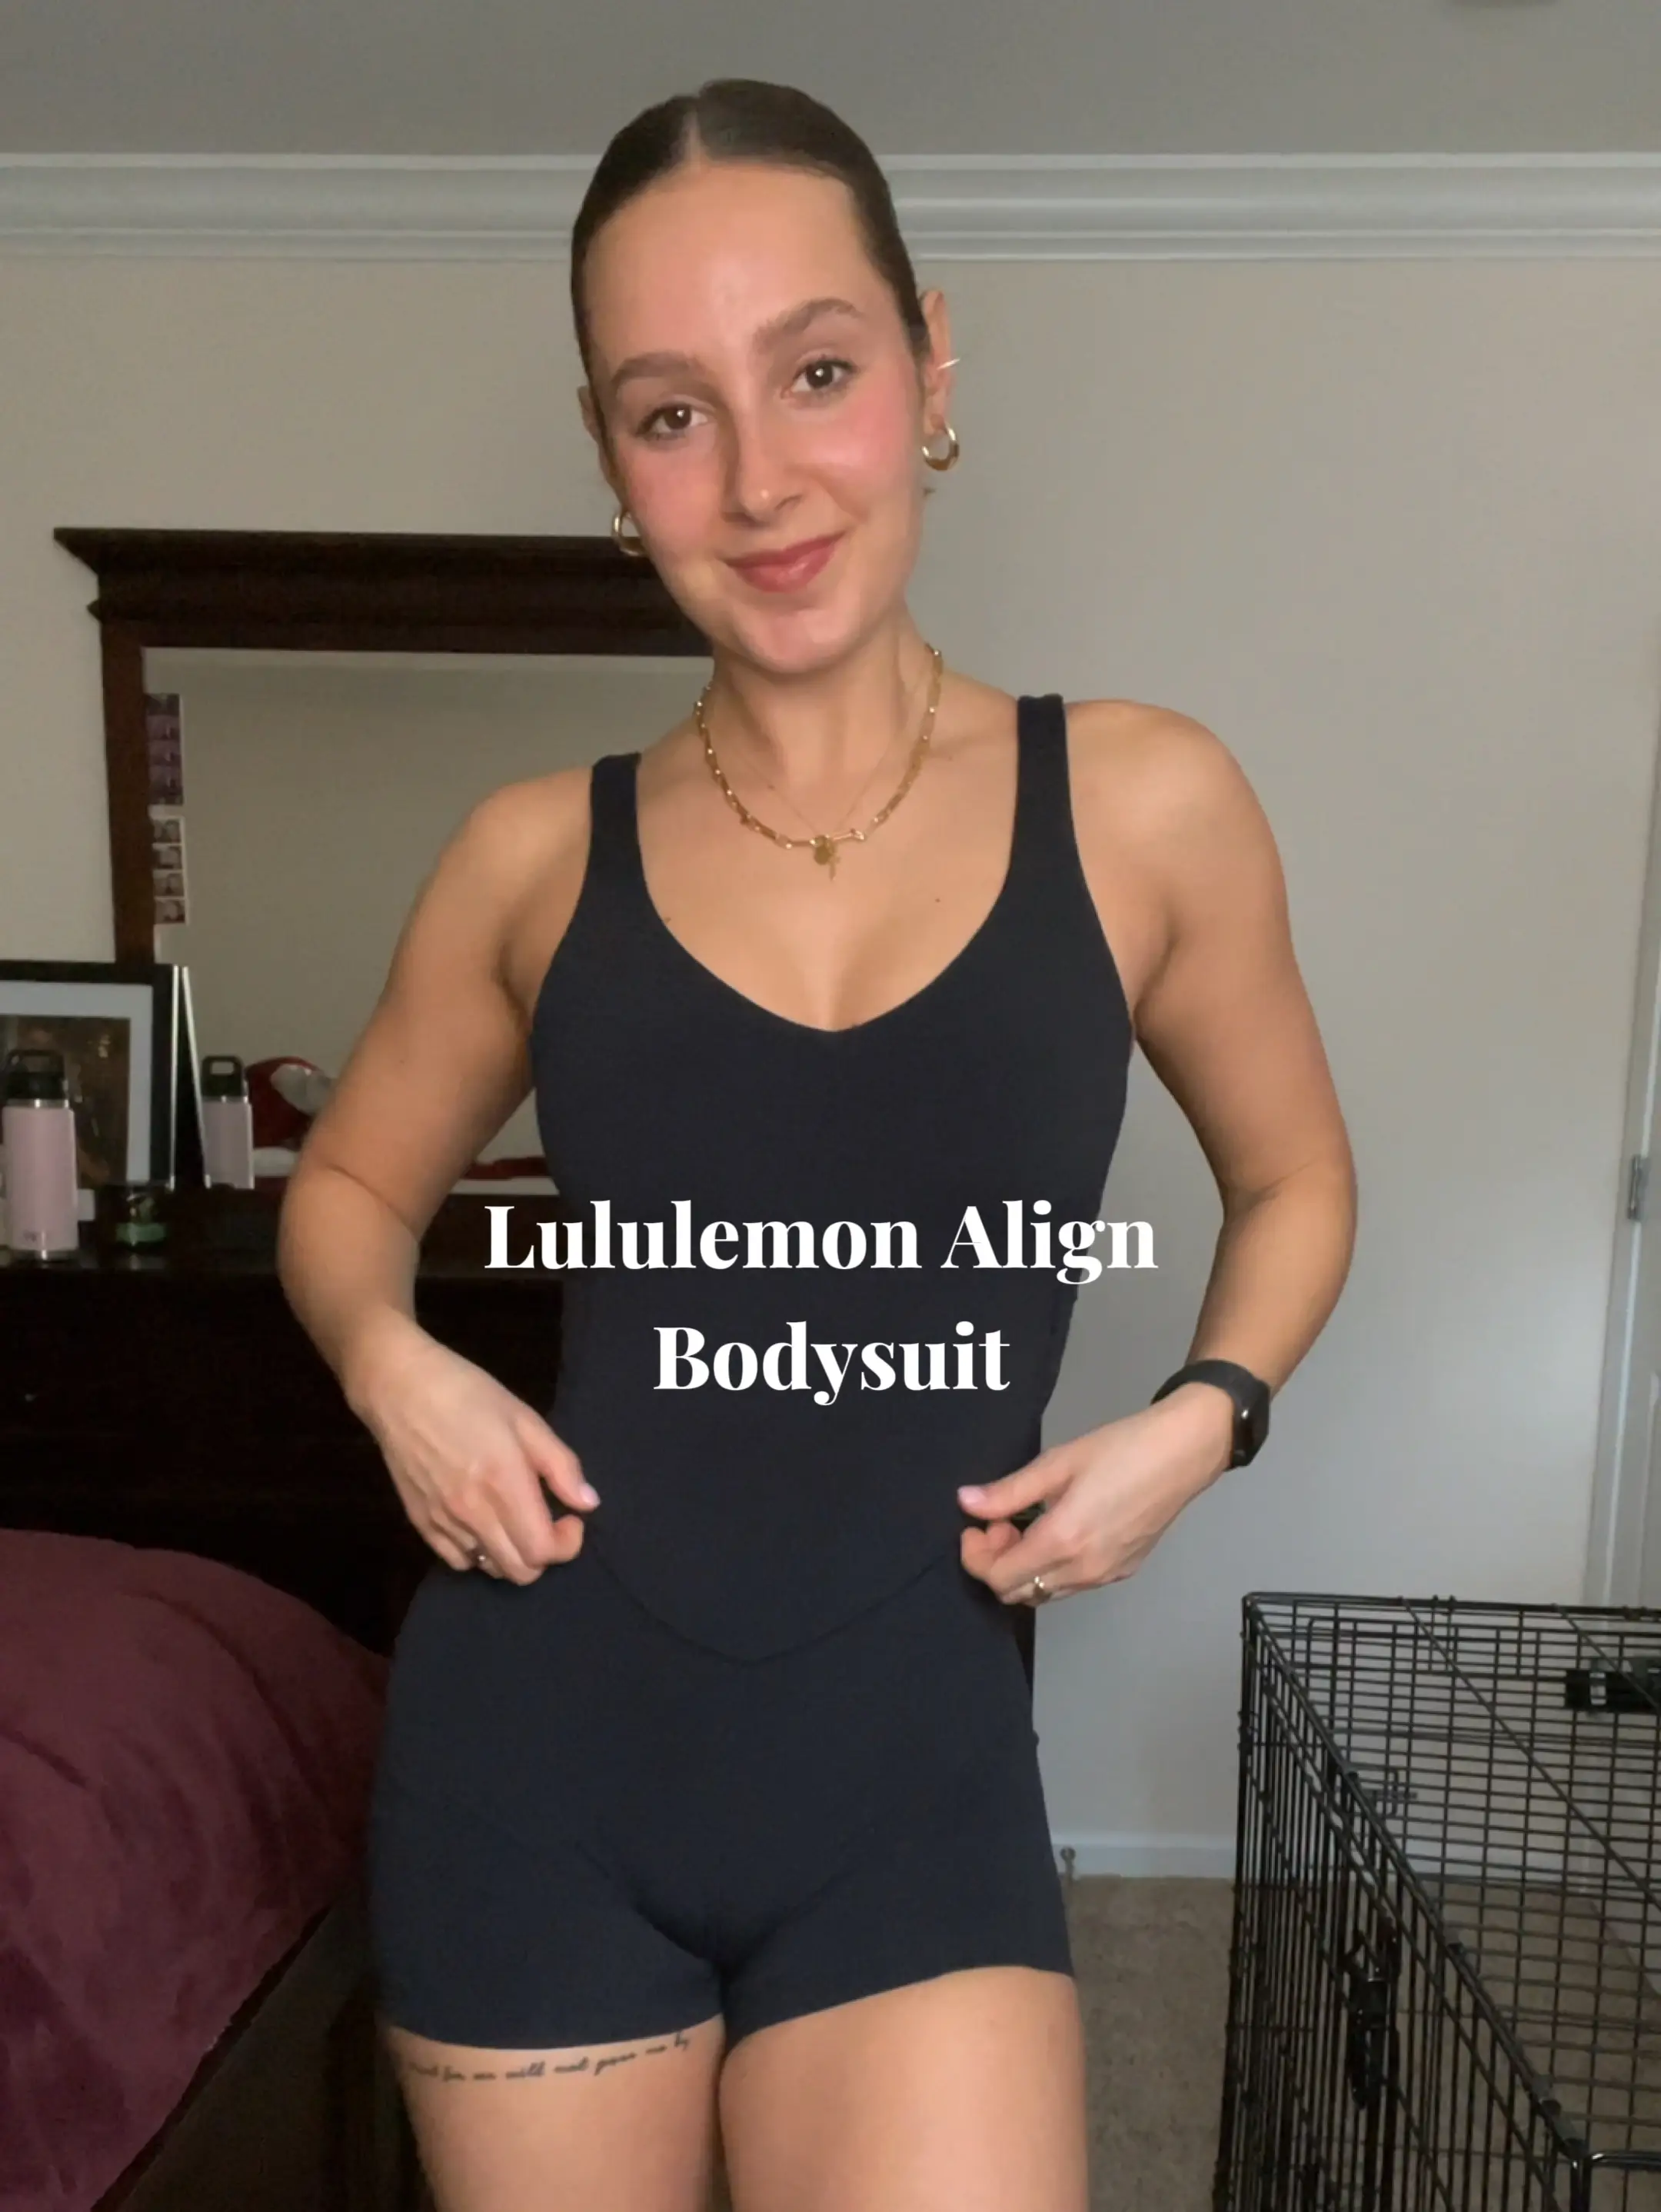 Lululemon's Align Bodysuit Is Comfortable and Flattering